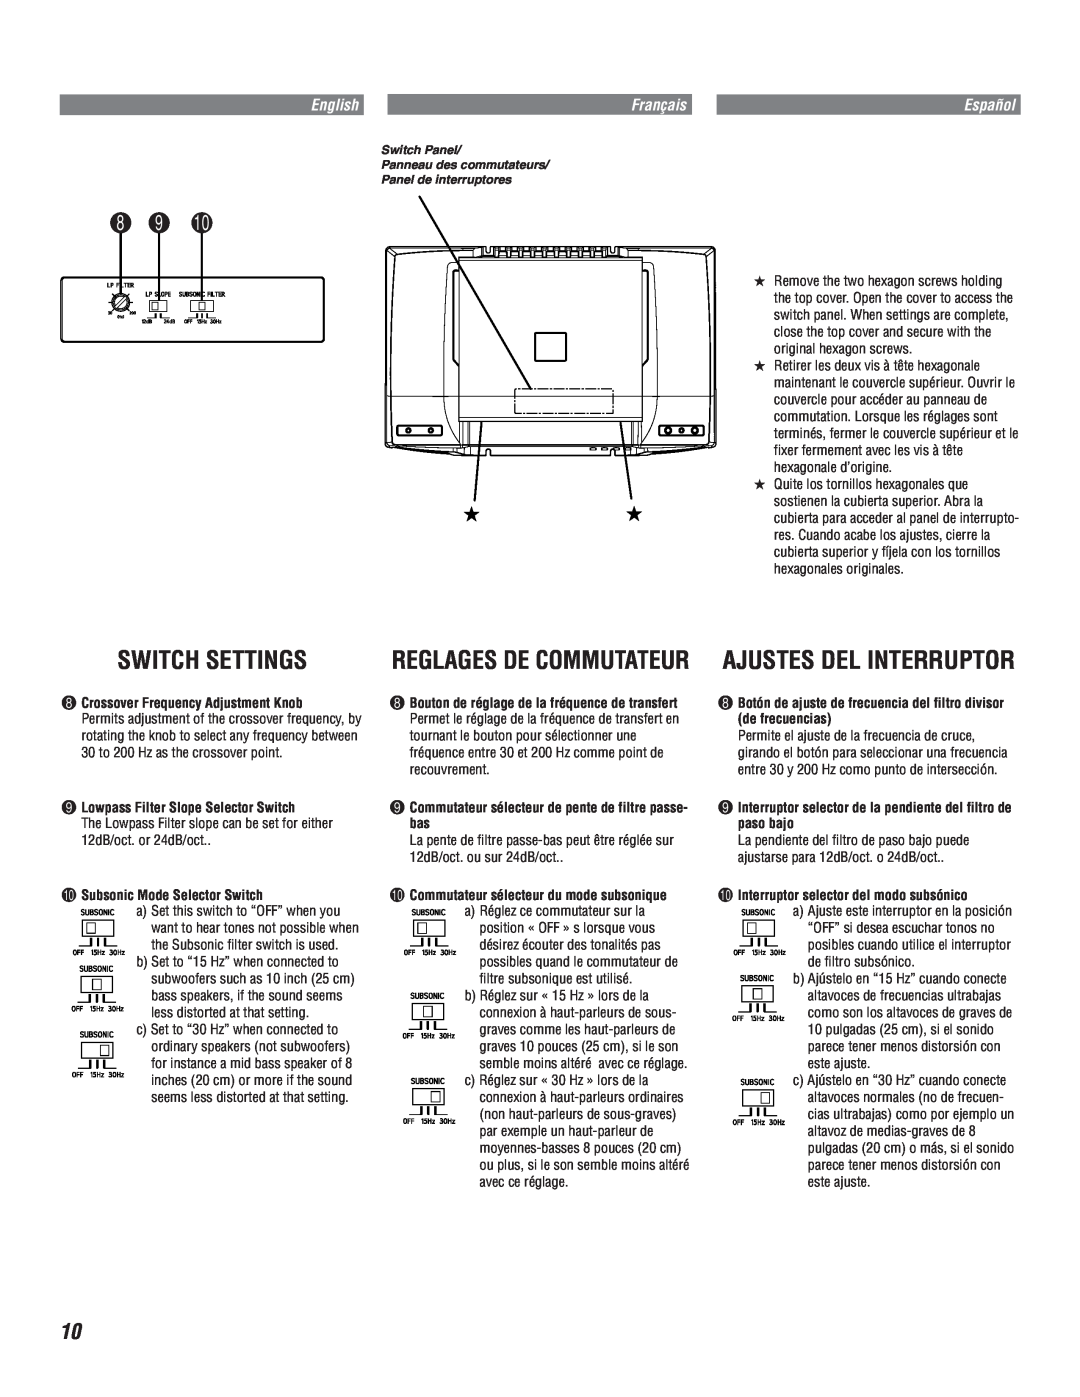 Alpine MRD-M1005 owner manual Switch Settings, Reglages De Commutateur Ajustes Del Interruptor, Español 